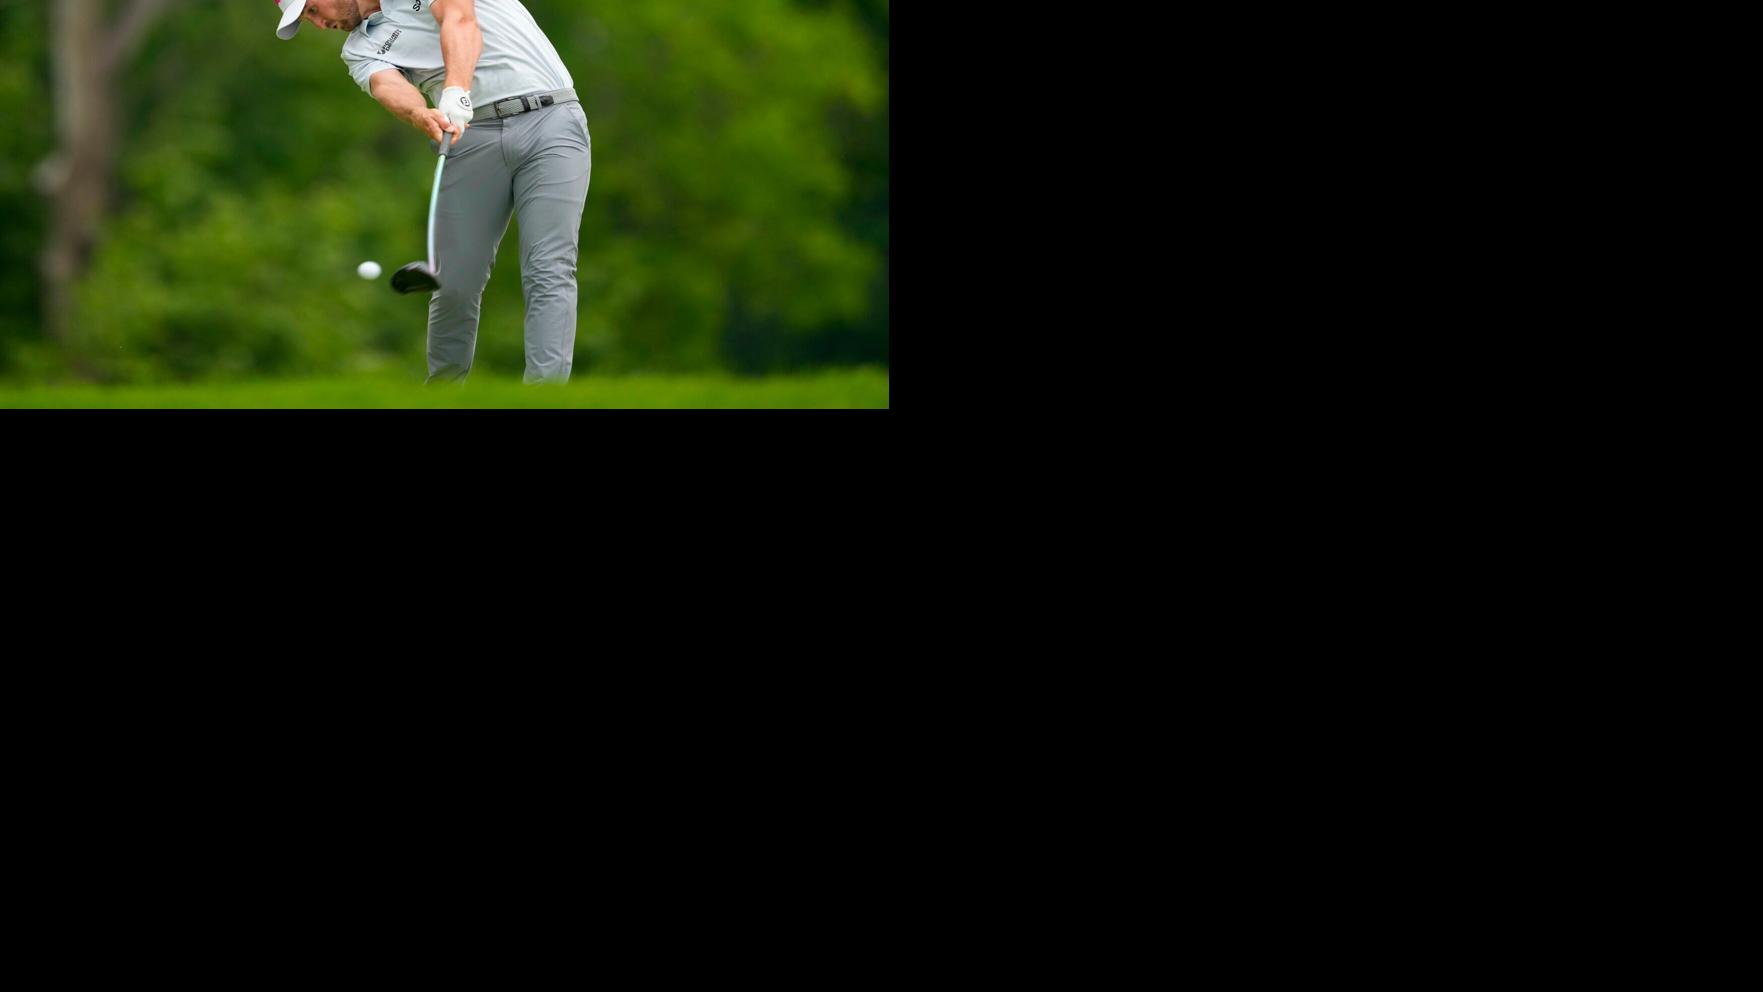 Wyndham Clark opens PGA Championship with even par 71